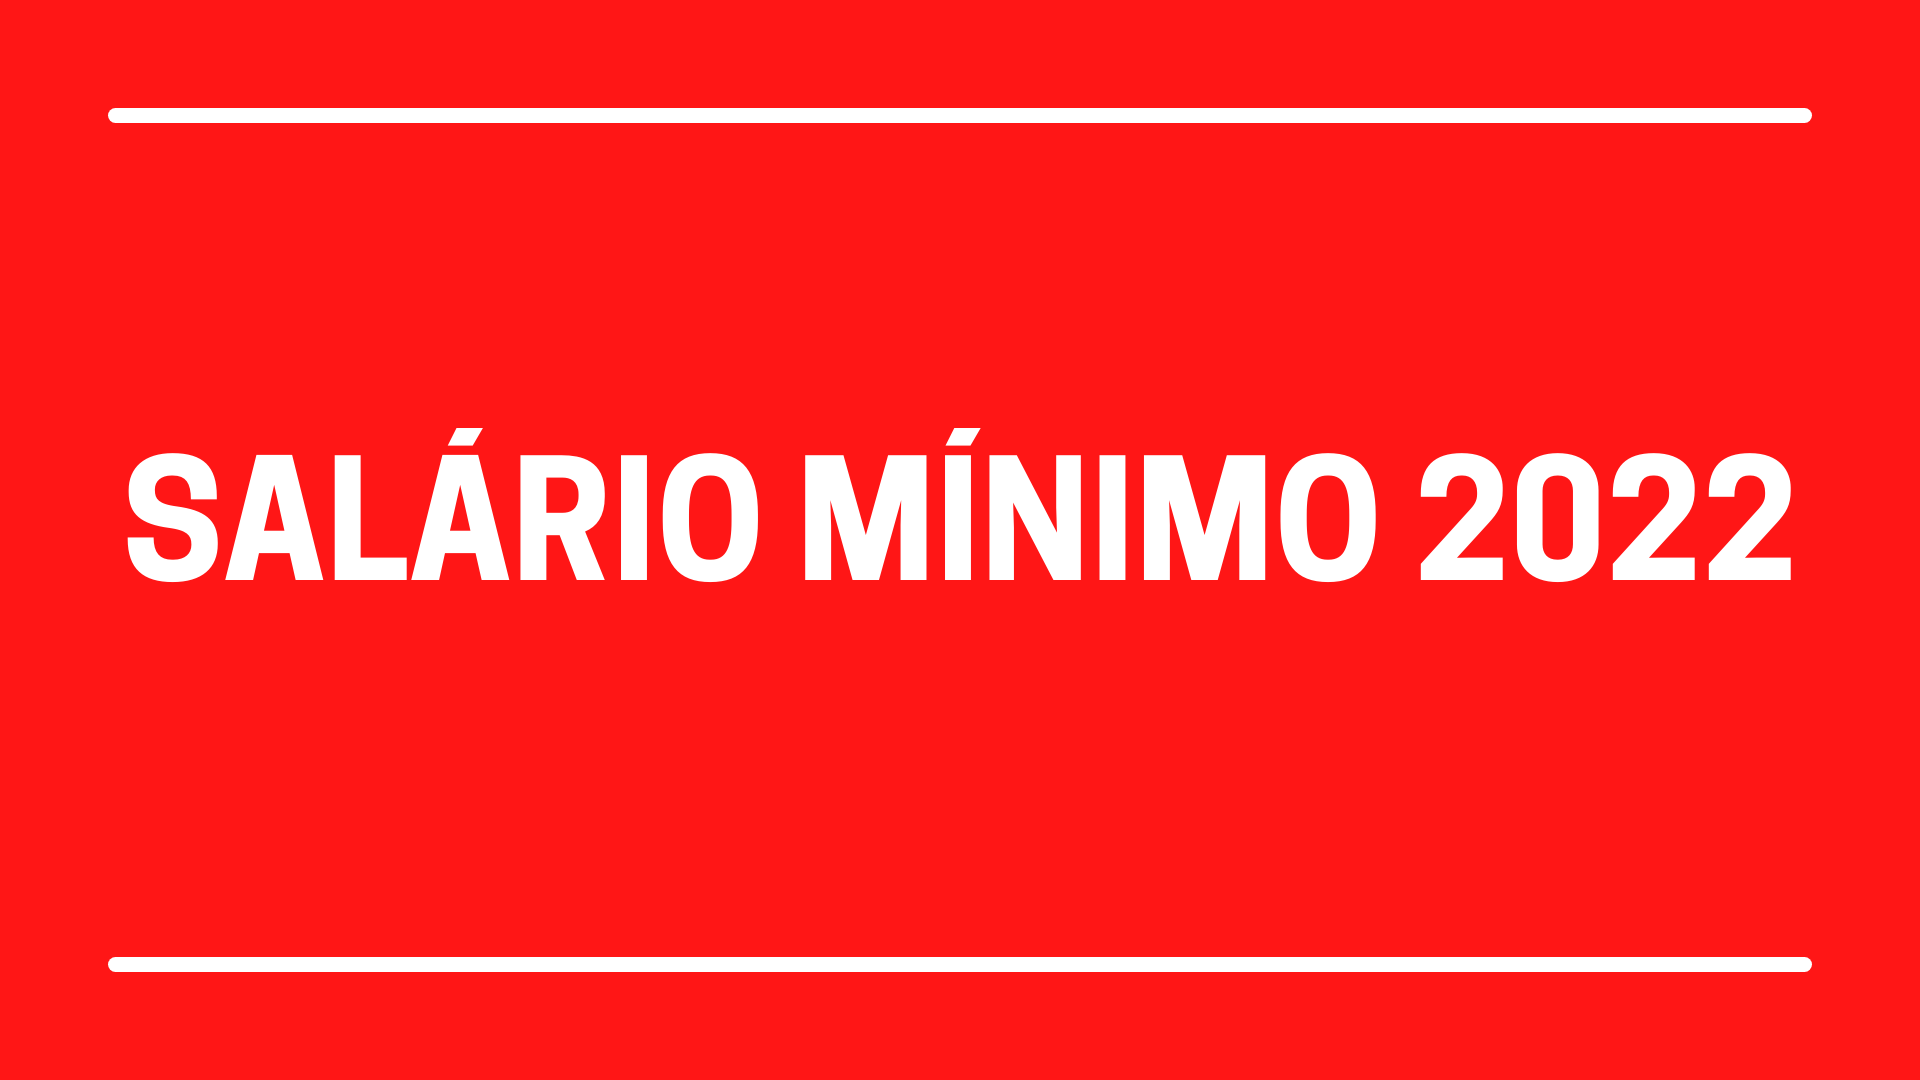 Salário Mínimo 2022 - Valor